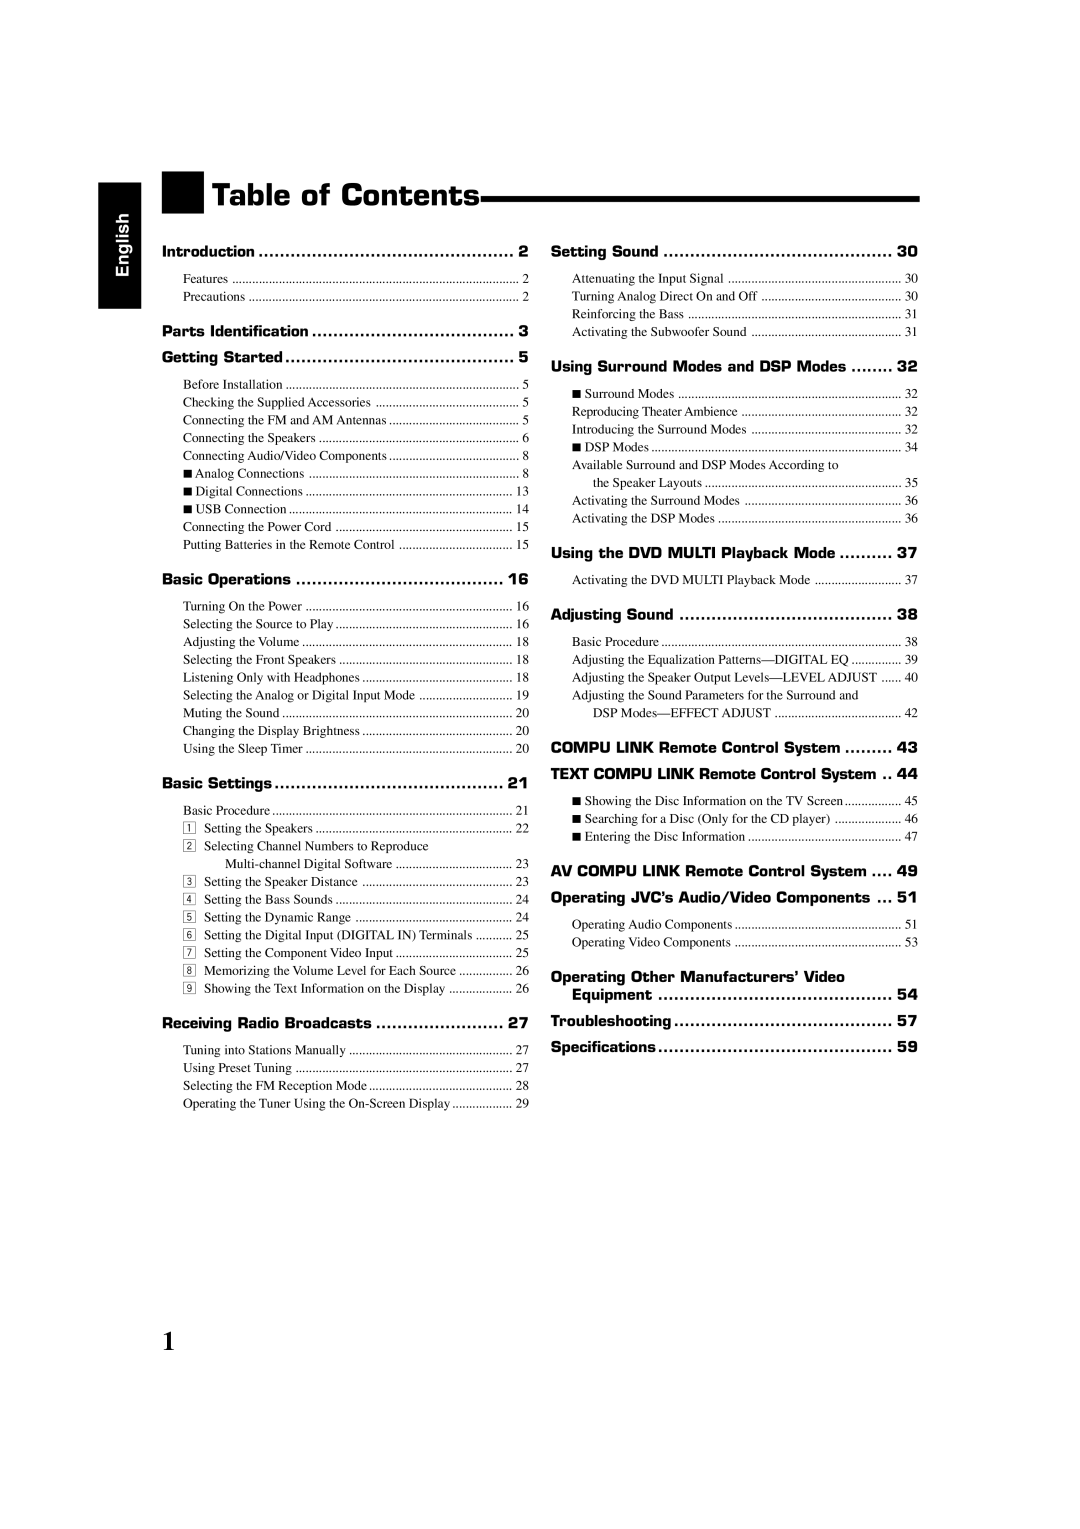 JVC RX-8020VBK manual English, Table of Contents 